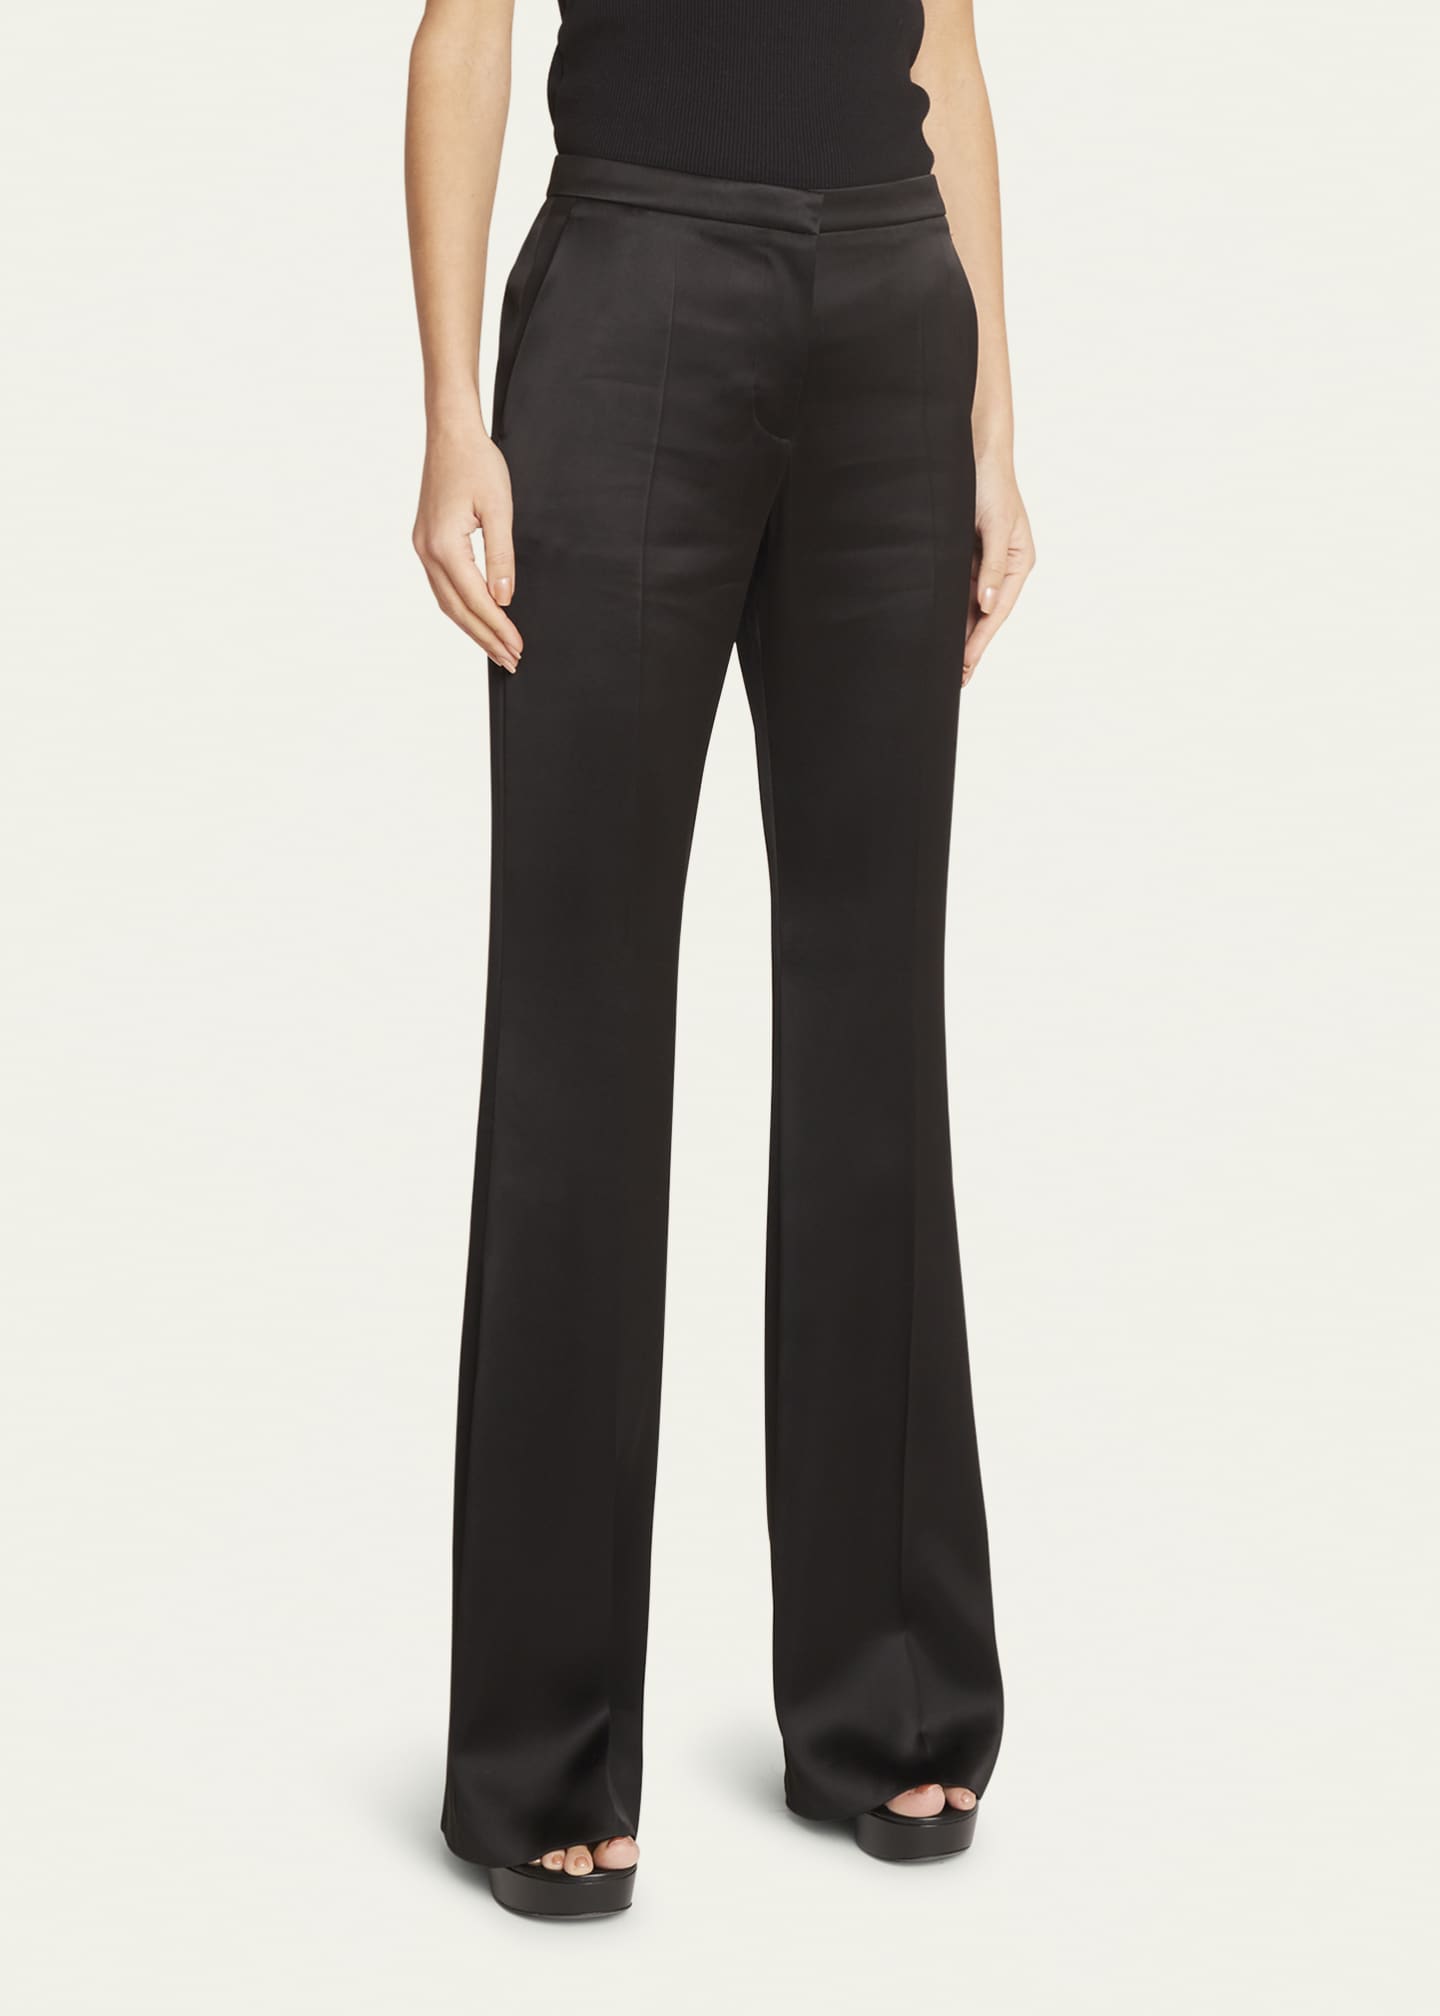 Givenchy Flared Tailoring Satin Pants - Bergdorf Goodman